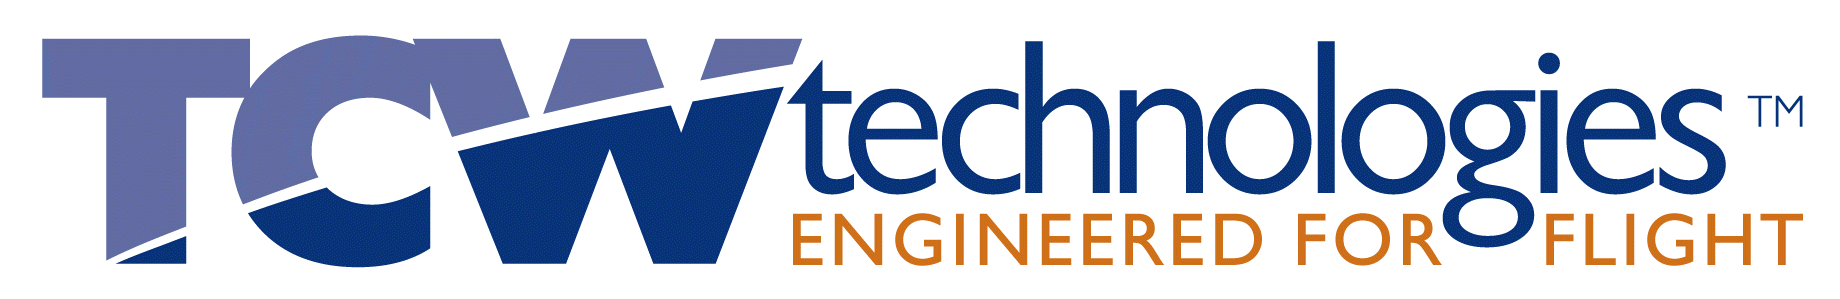 TCW Logo - Experimental Aircraft Electronics - TCW Technologies